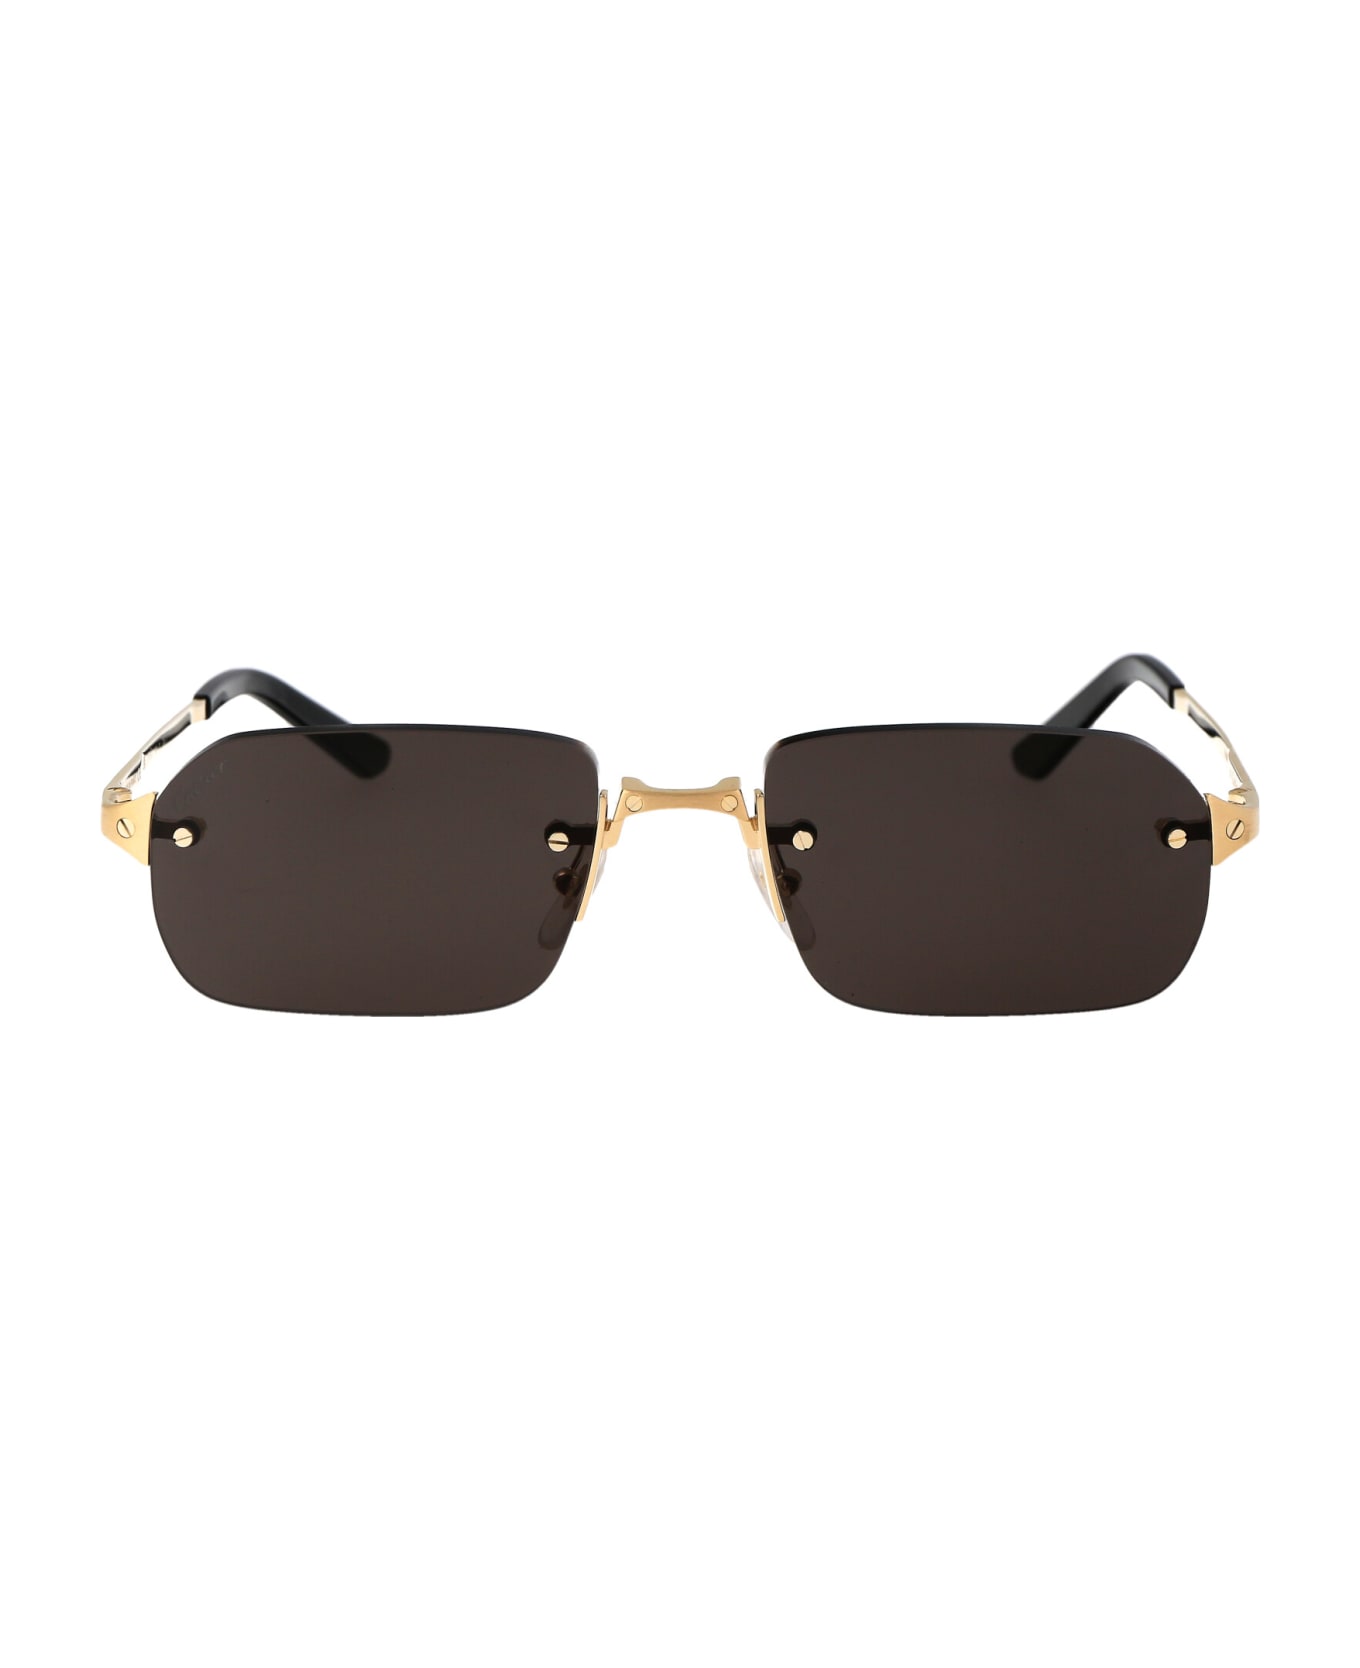 Cartier Eyewear Ct0460s Sunglasses - 001 GOLD GOLD GREY